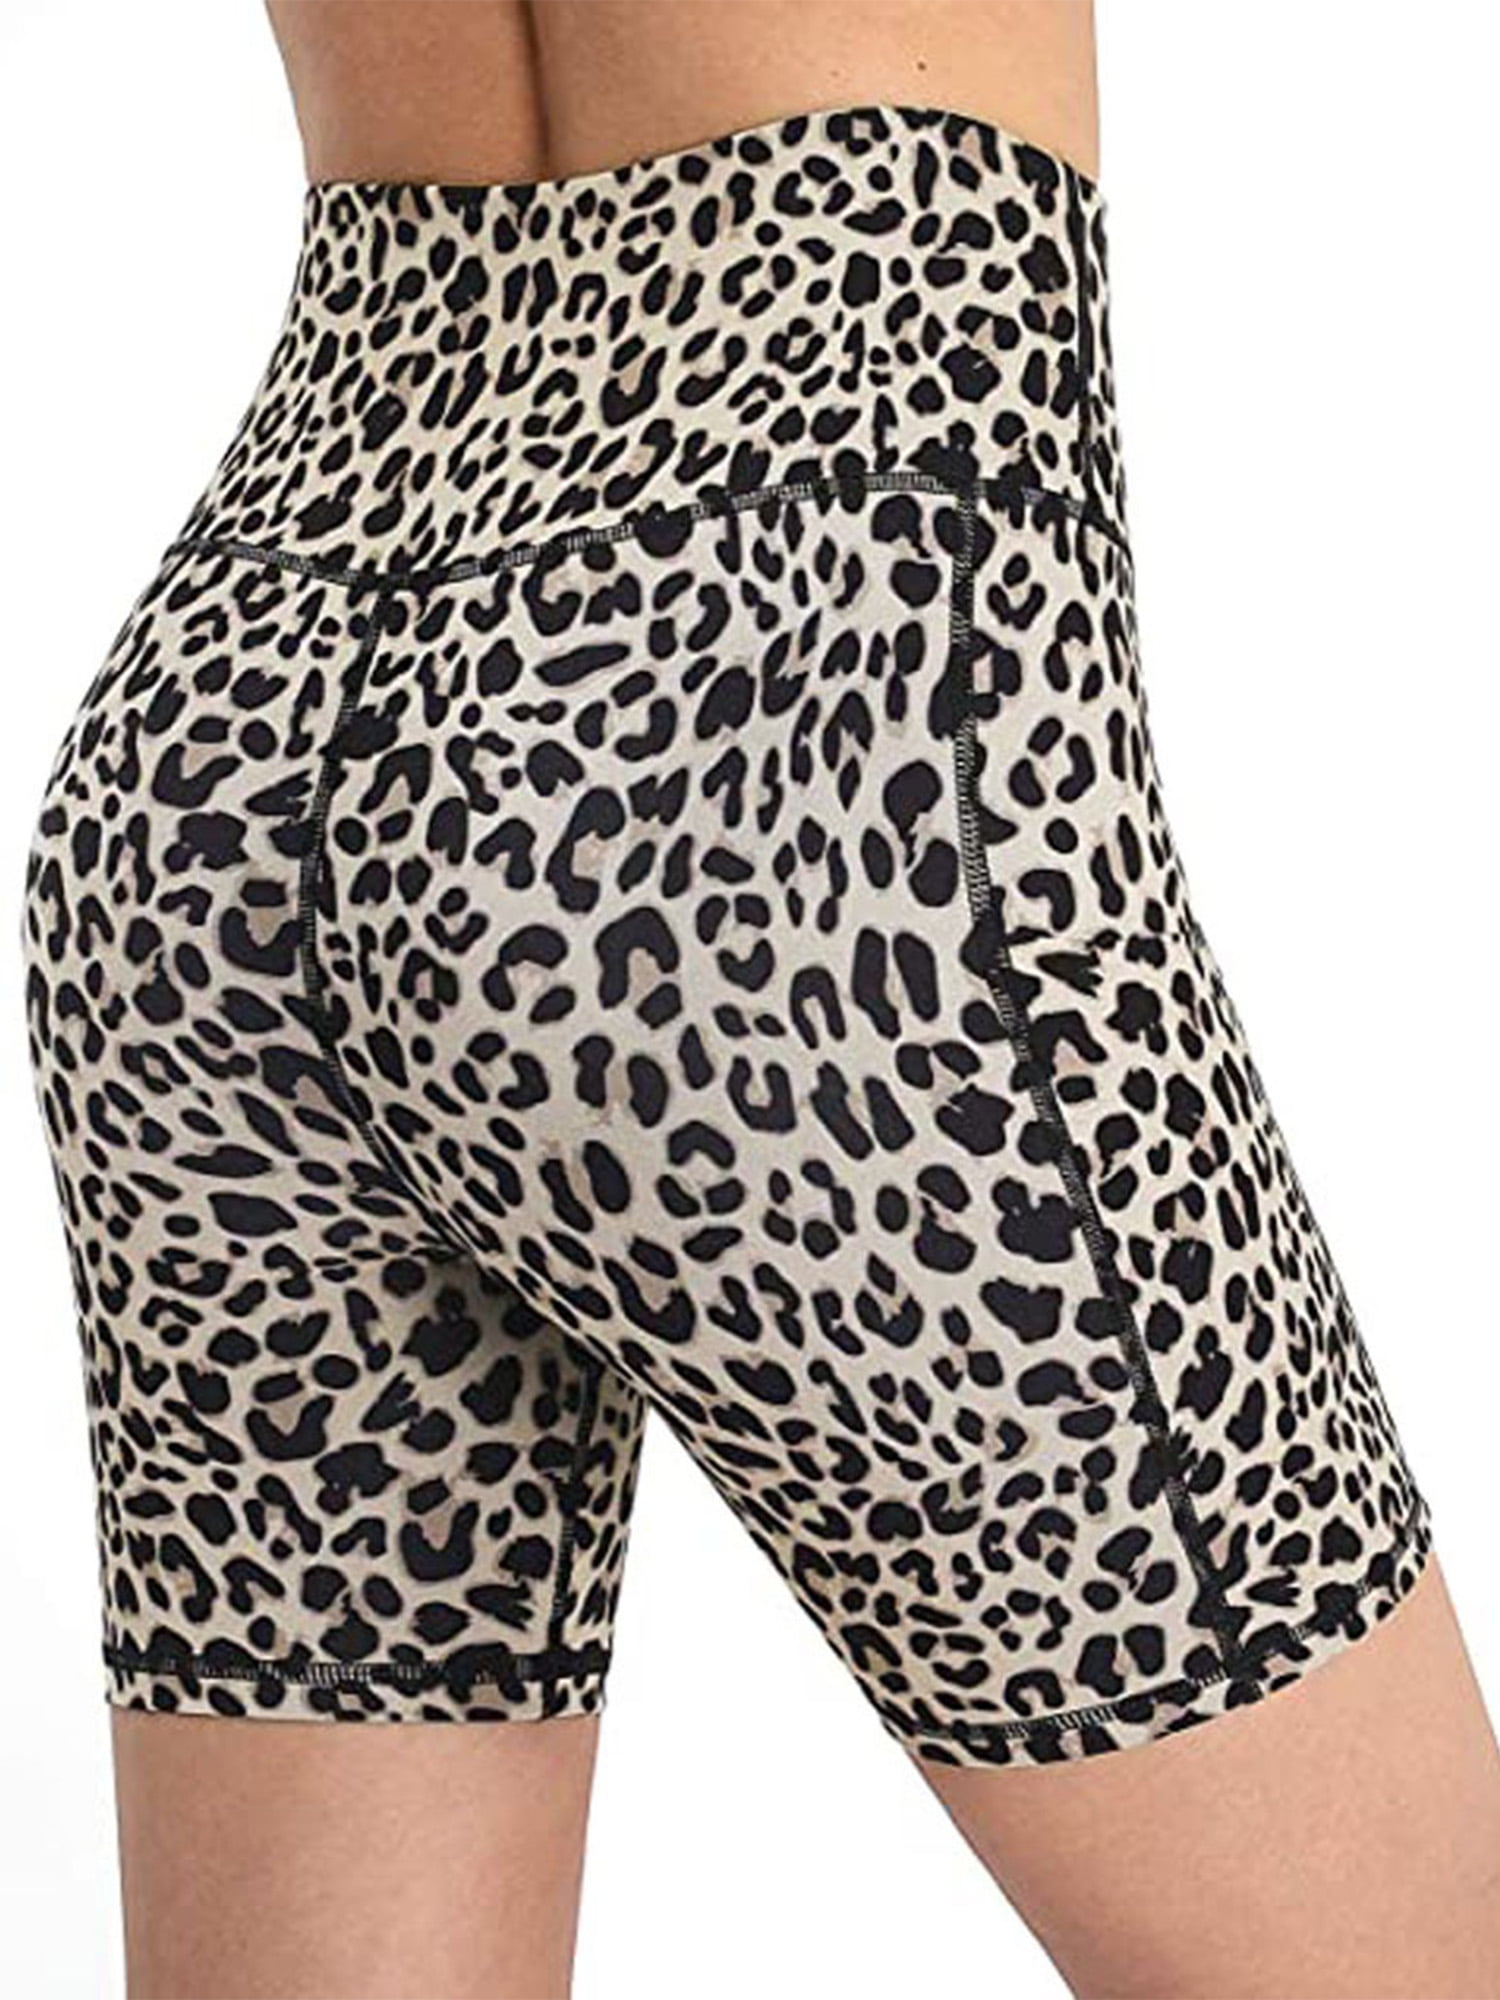 walmart leopard biker shorts